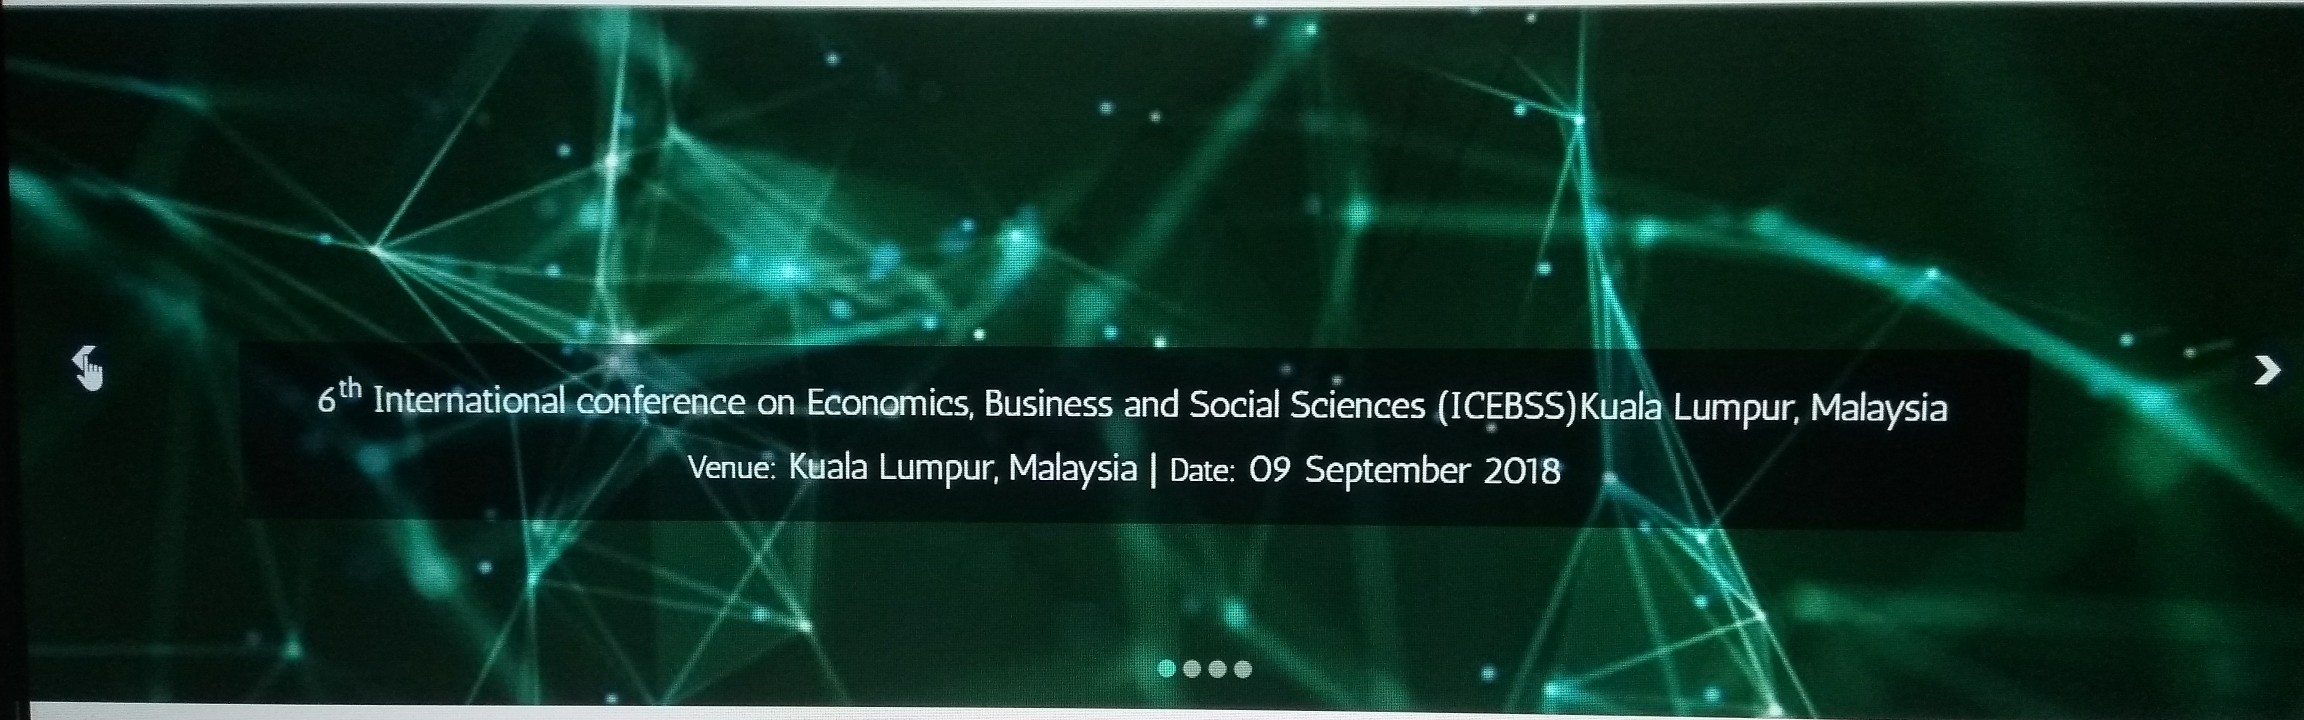 6th International conference on Economics, Business and Social Sciences (ICEBSS), Kuala Lumpur, Malaysia